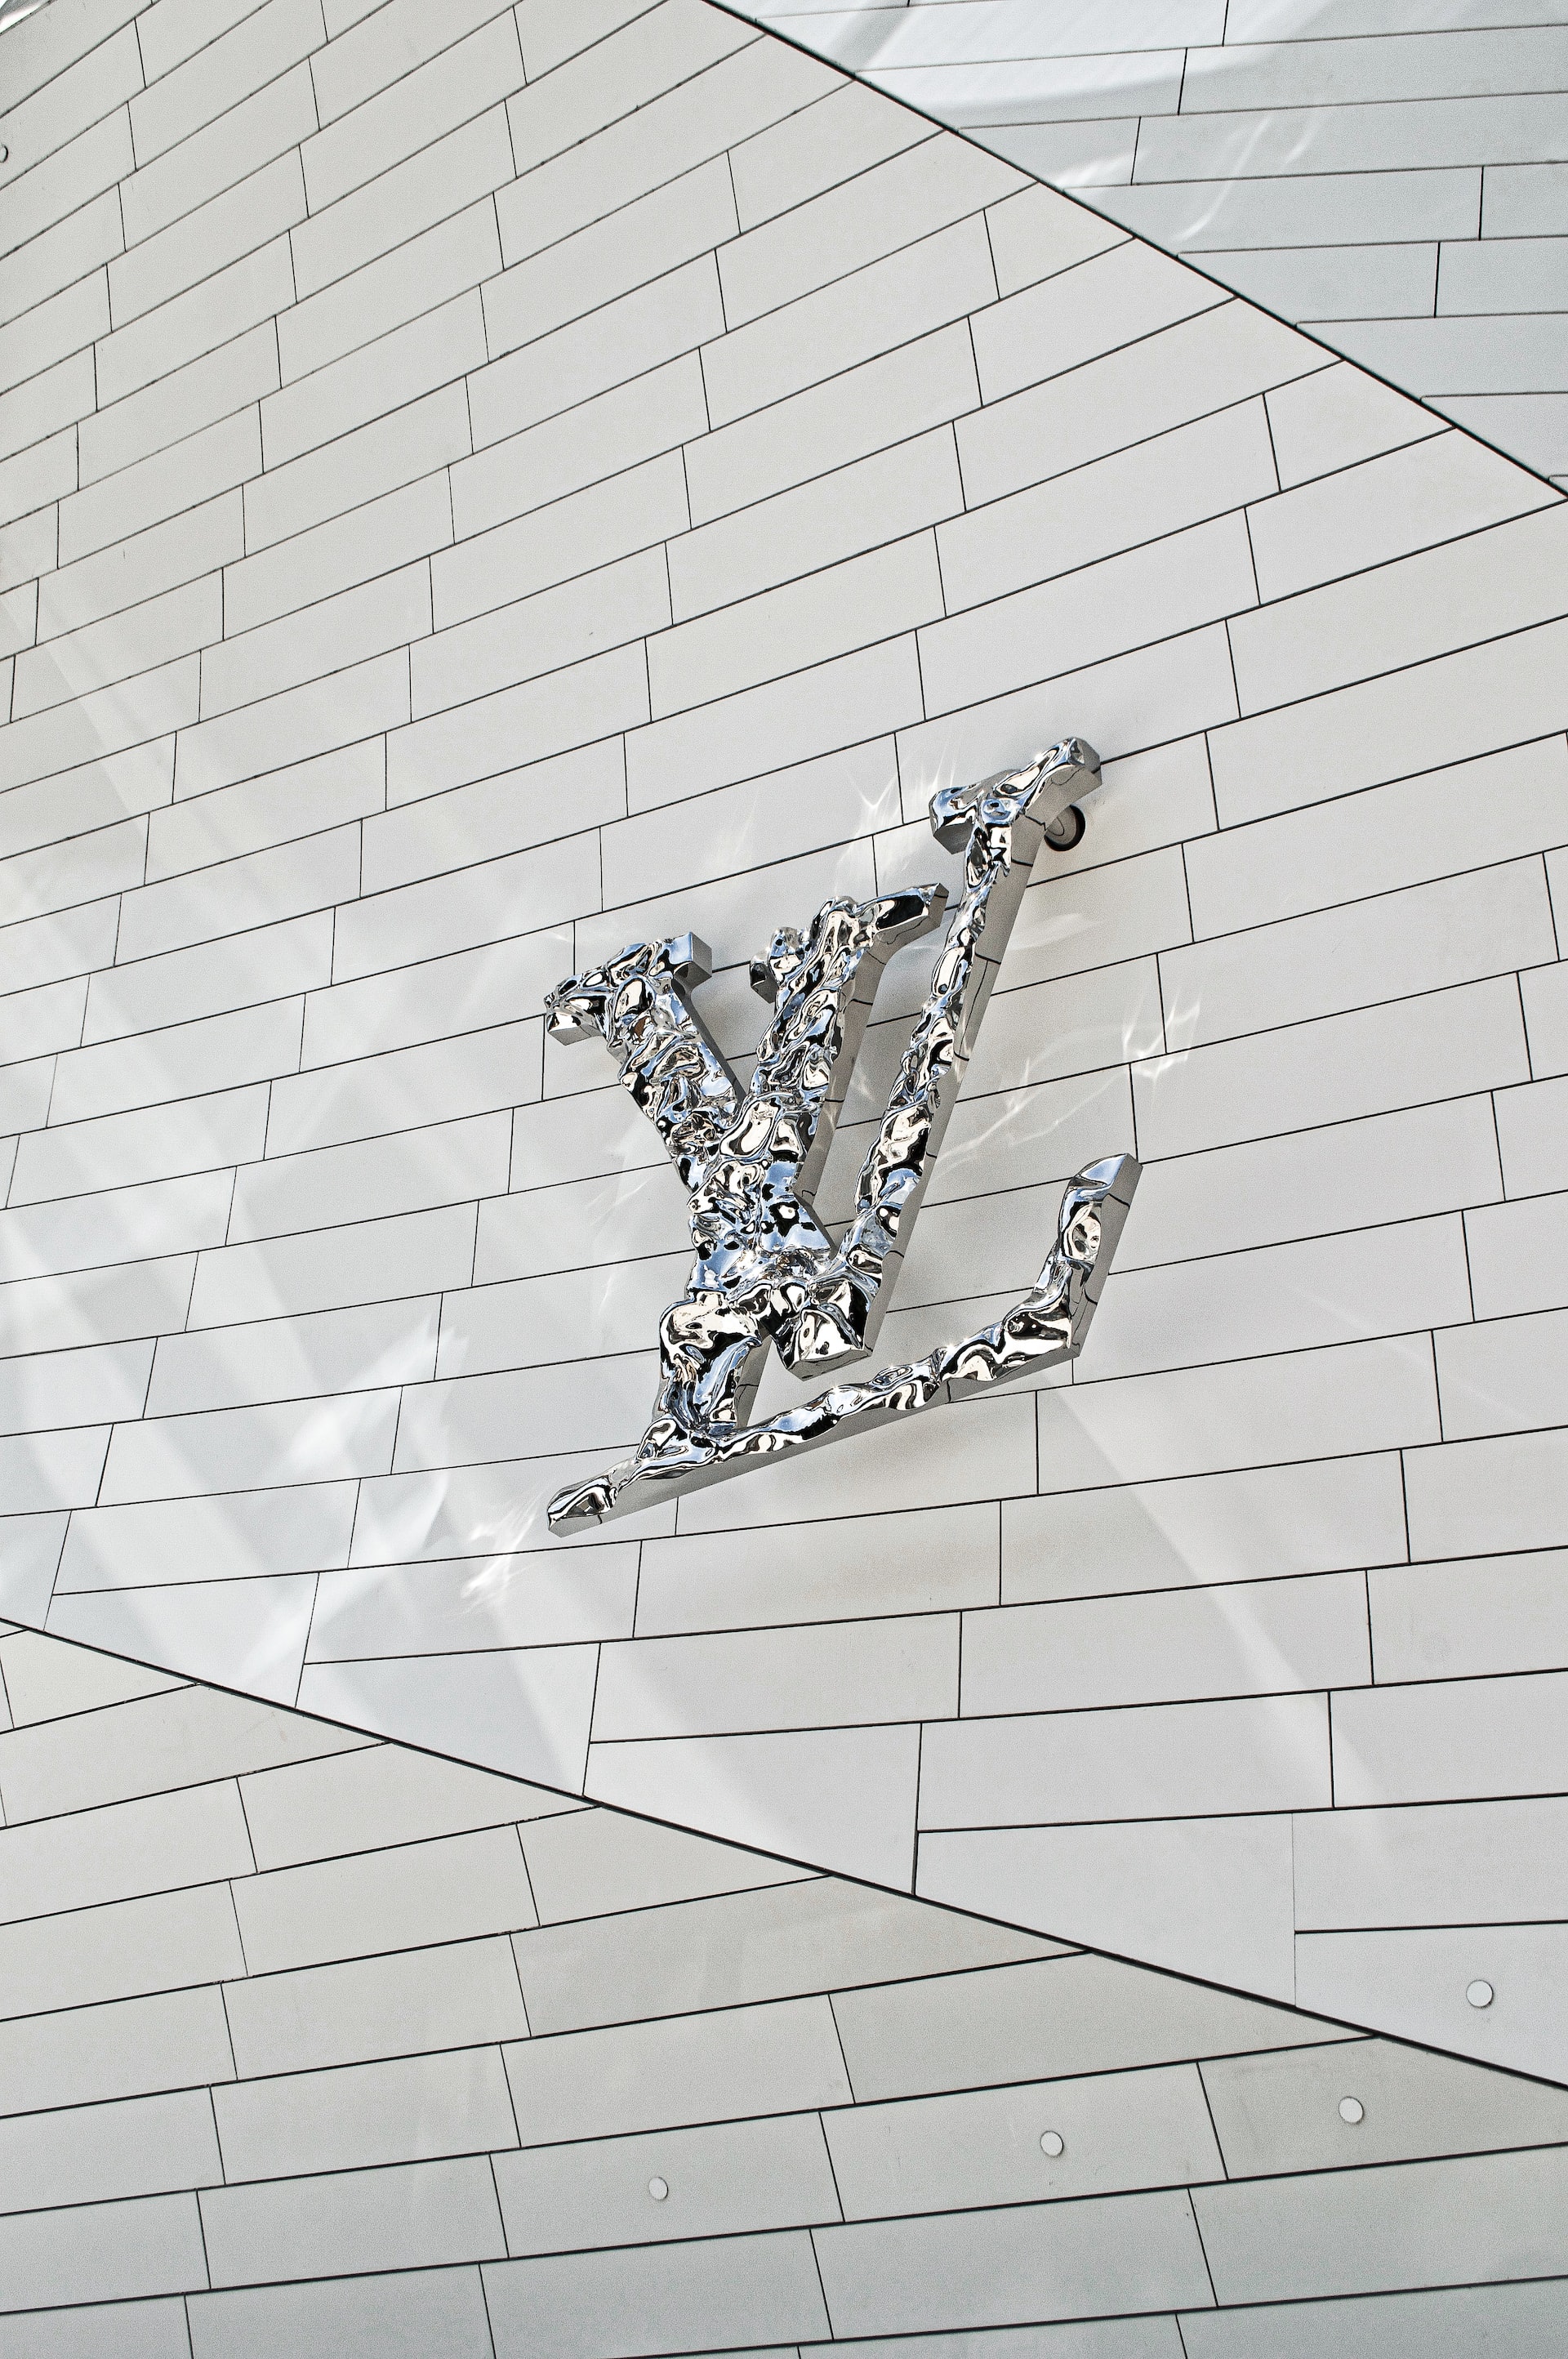 Louis Vuitton Store in Paris